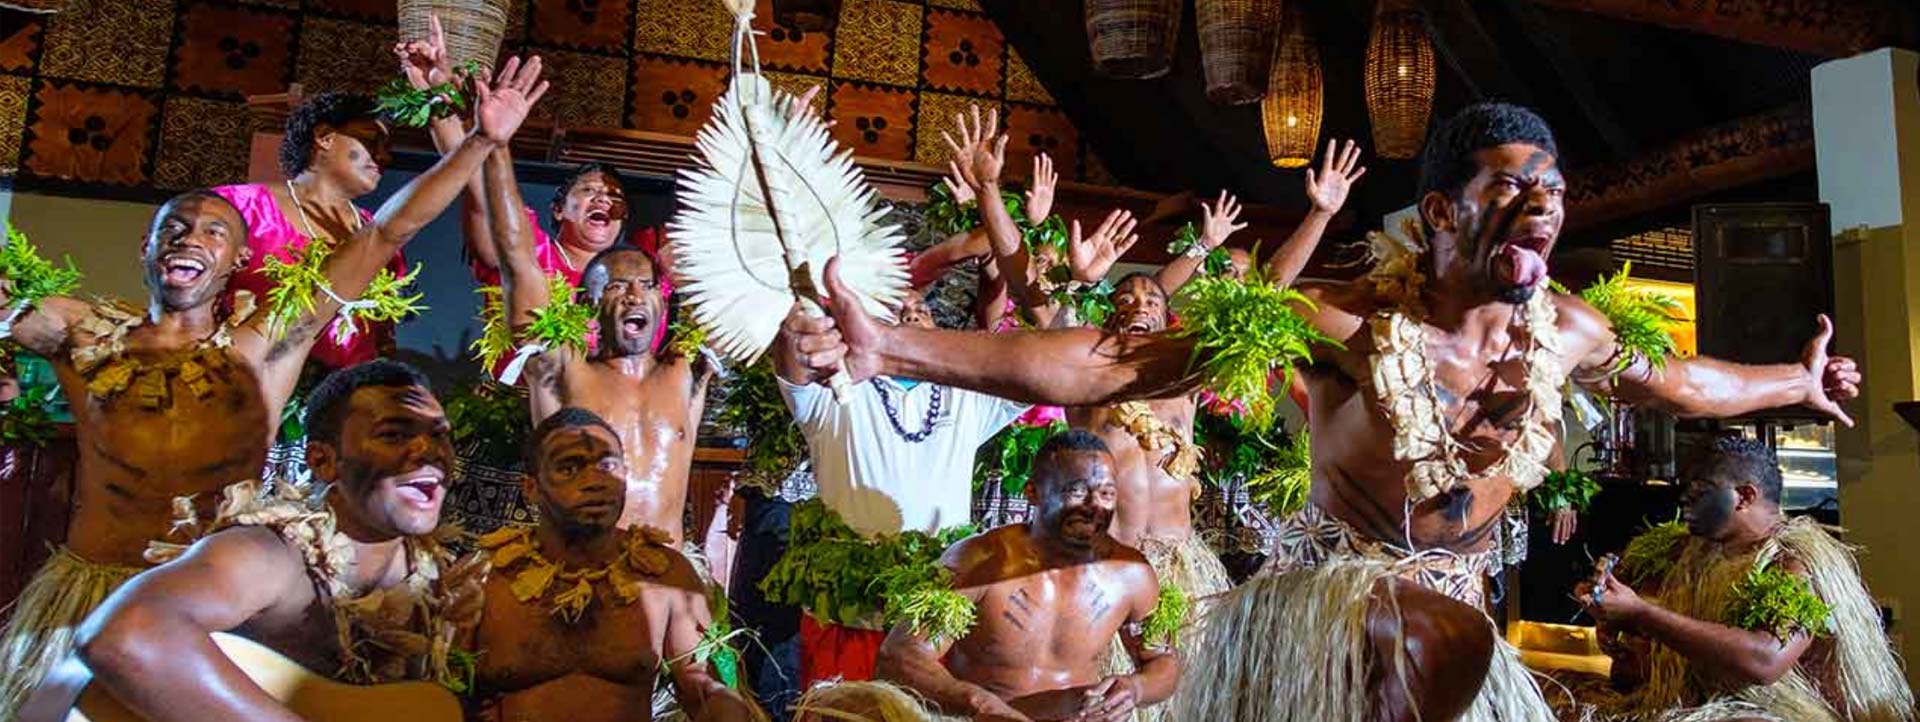 FIJI-GETAWAY-PACKAGE-cultural-dancers